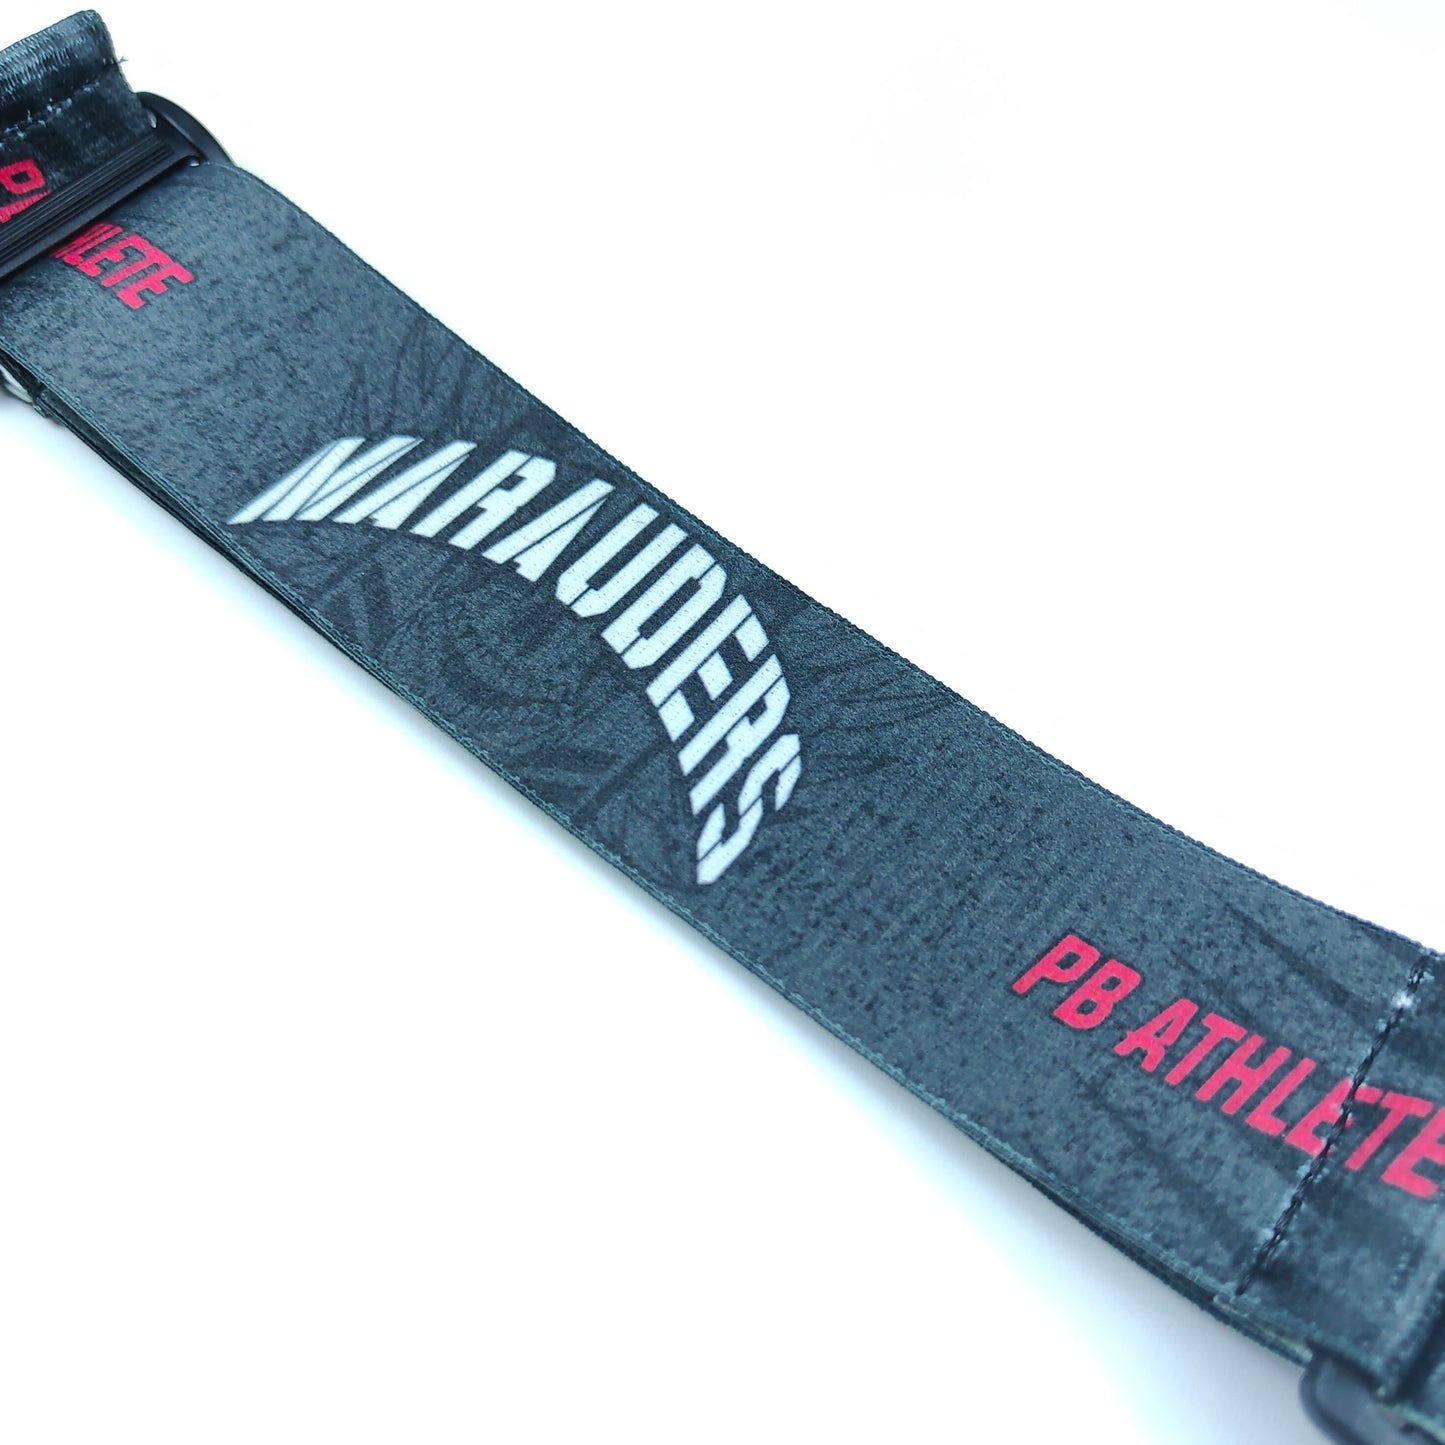 Marauders - Mask Strap